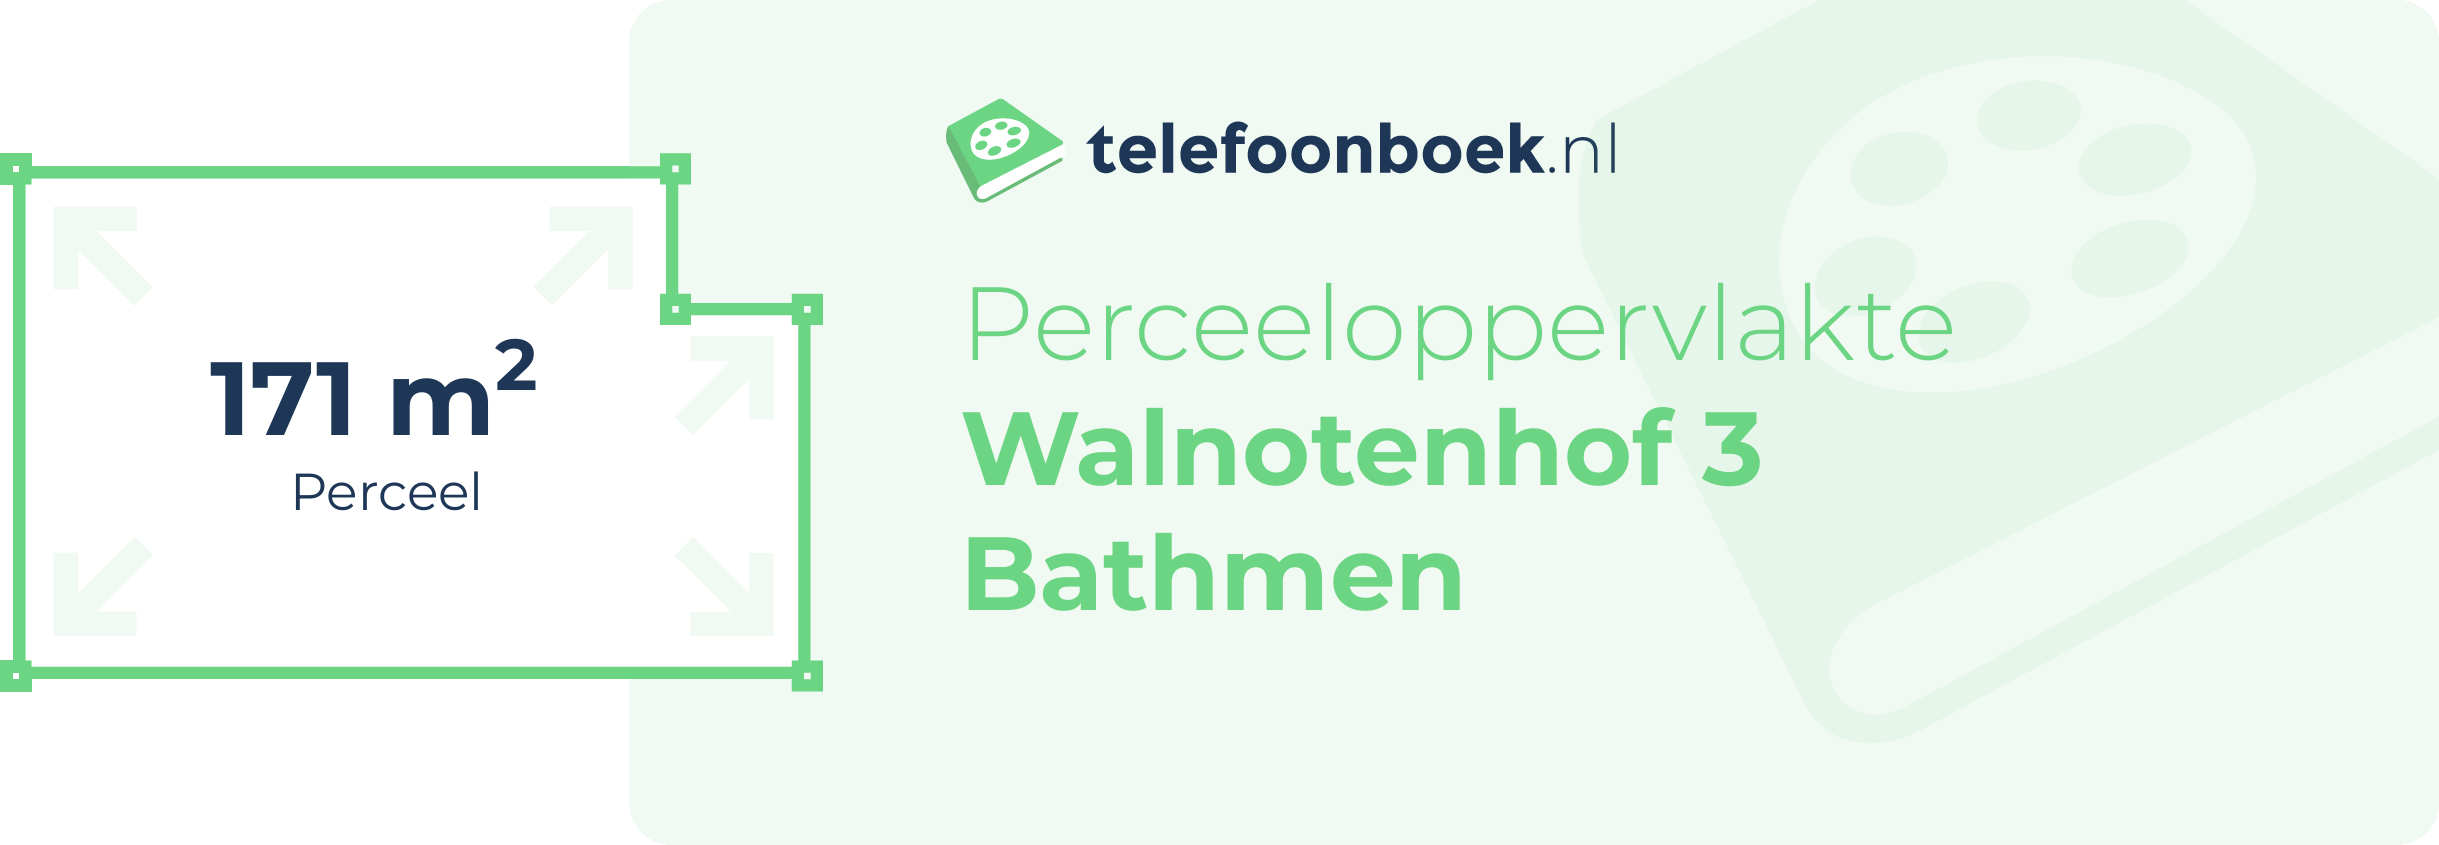 Perceeloppervlakte Walnotenhof 3 Bathmen